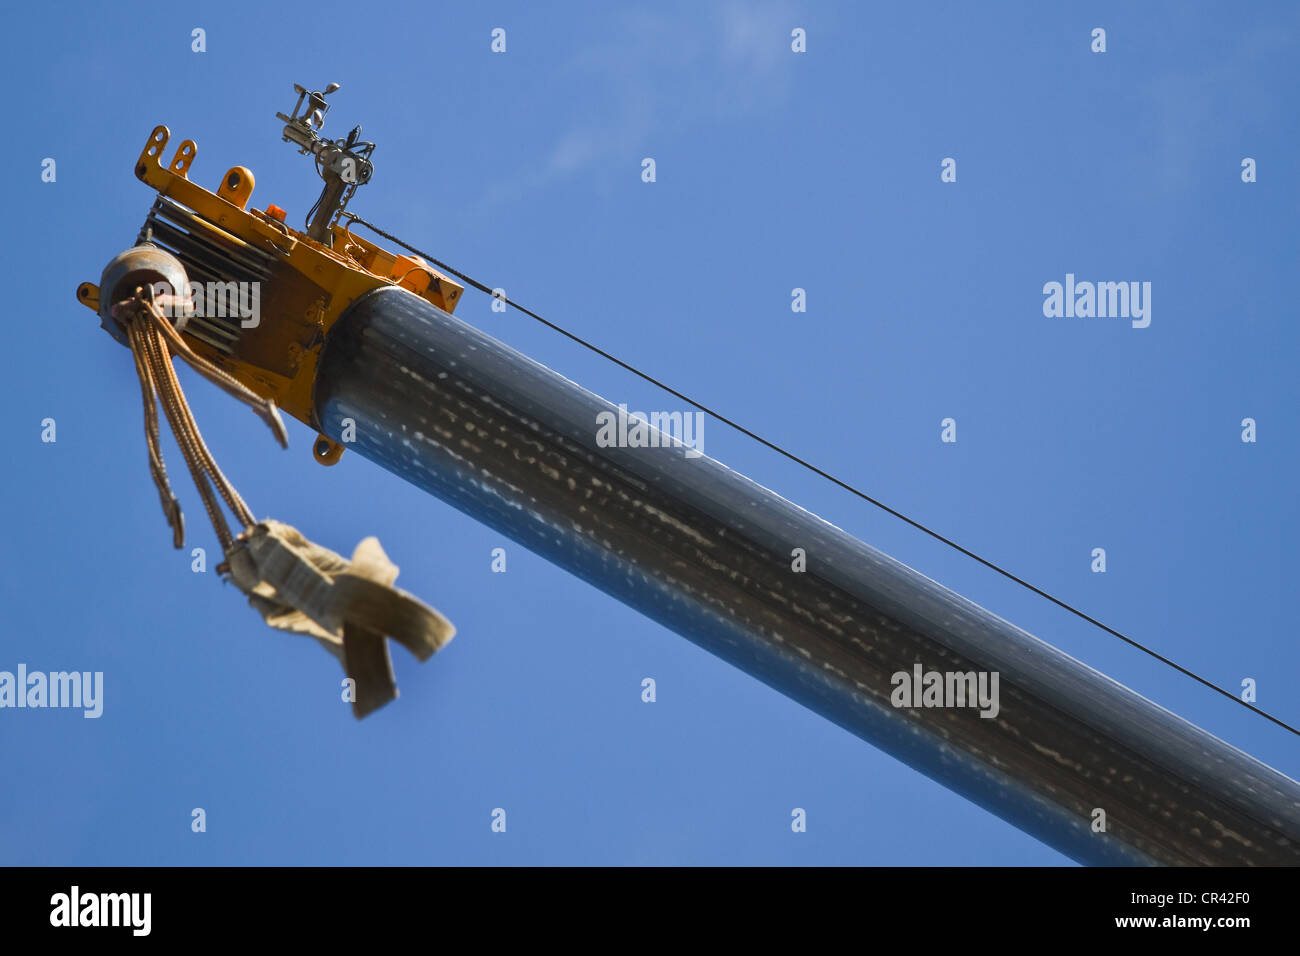 Telescopic crane arm seen from below. Stock Photo